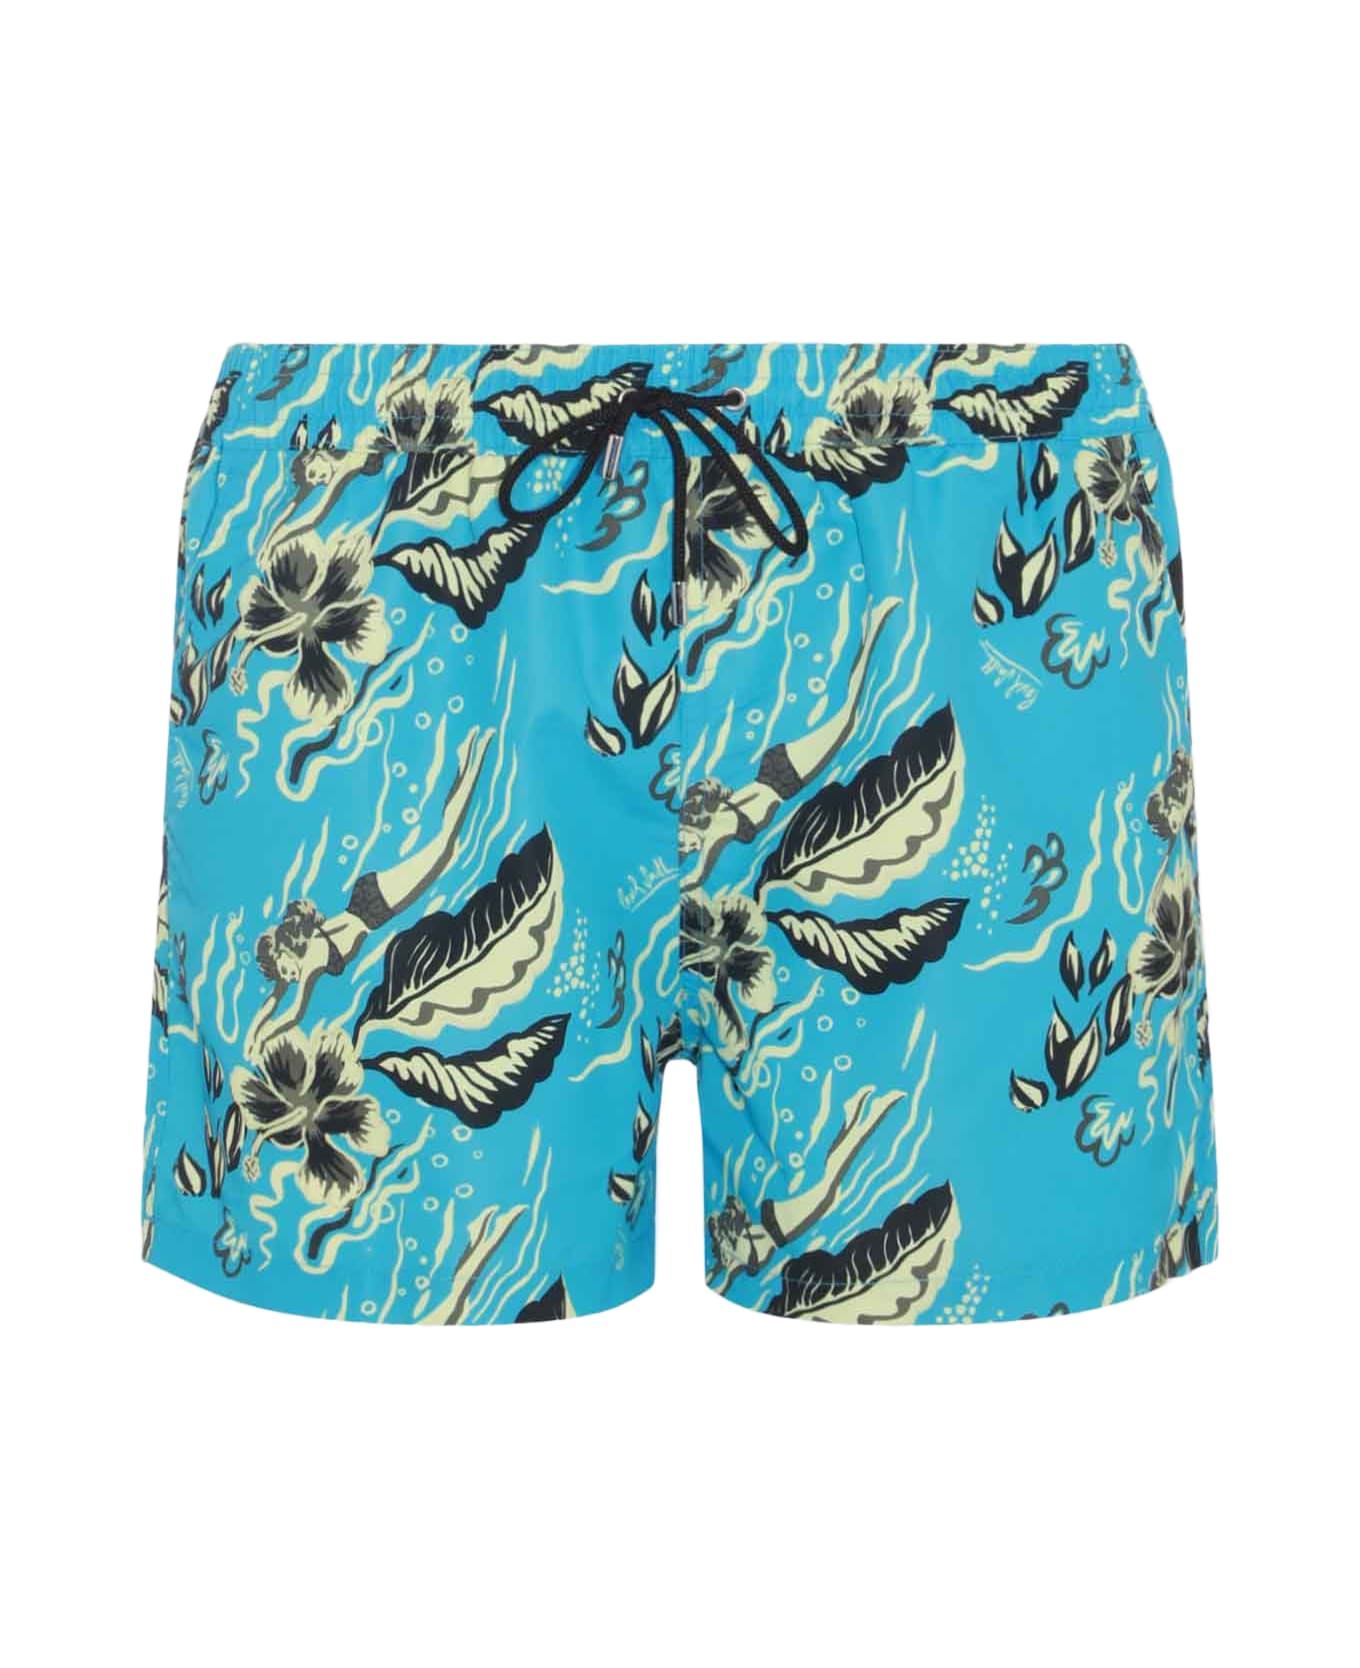 Paul Smith Light Blue Multicolour Swim Shorts - Blue 水着